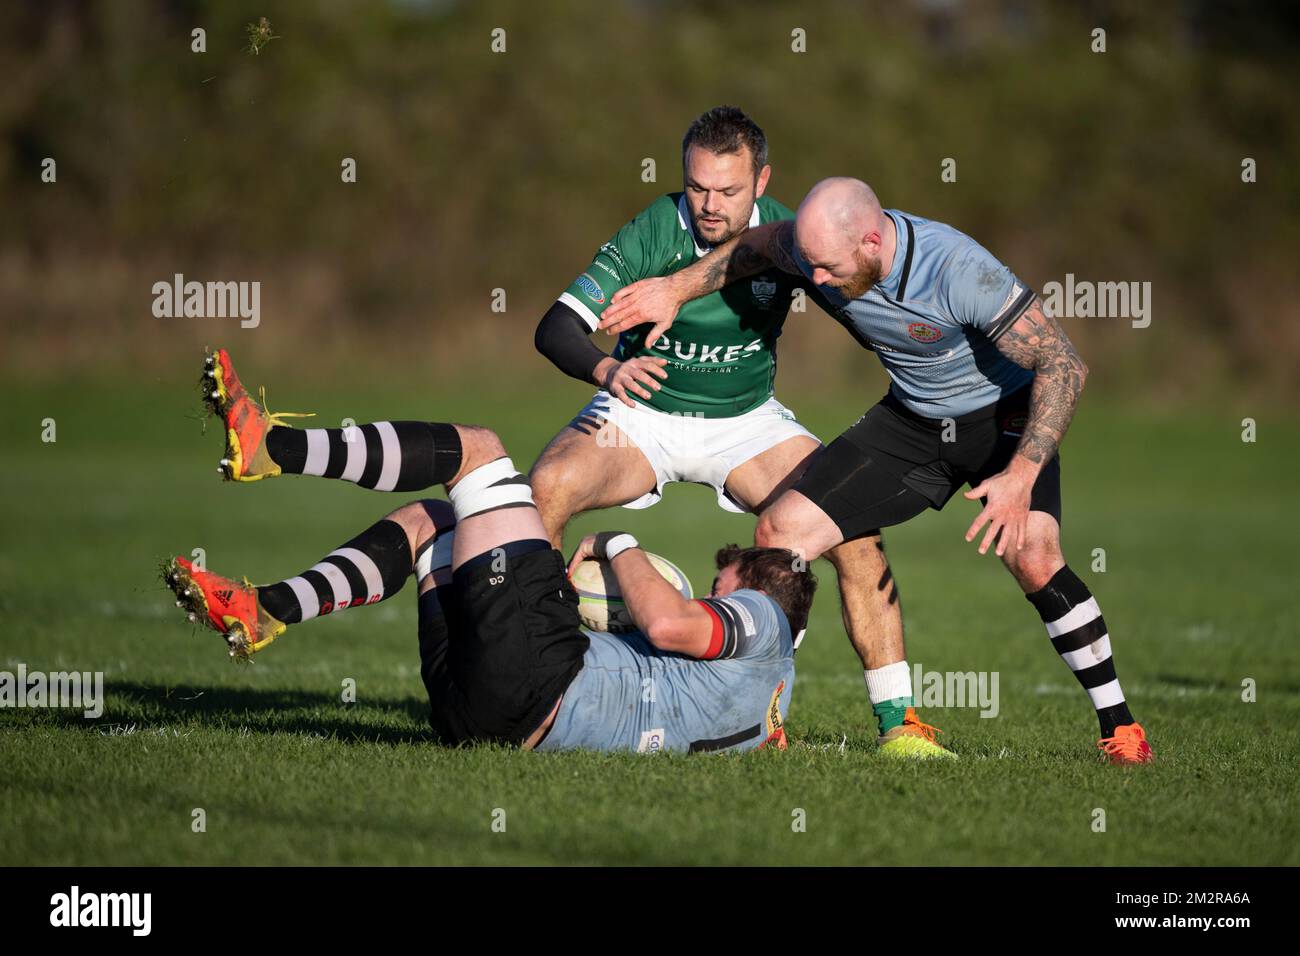 Giocatori di rugby in azione Foto Stock